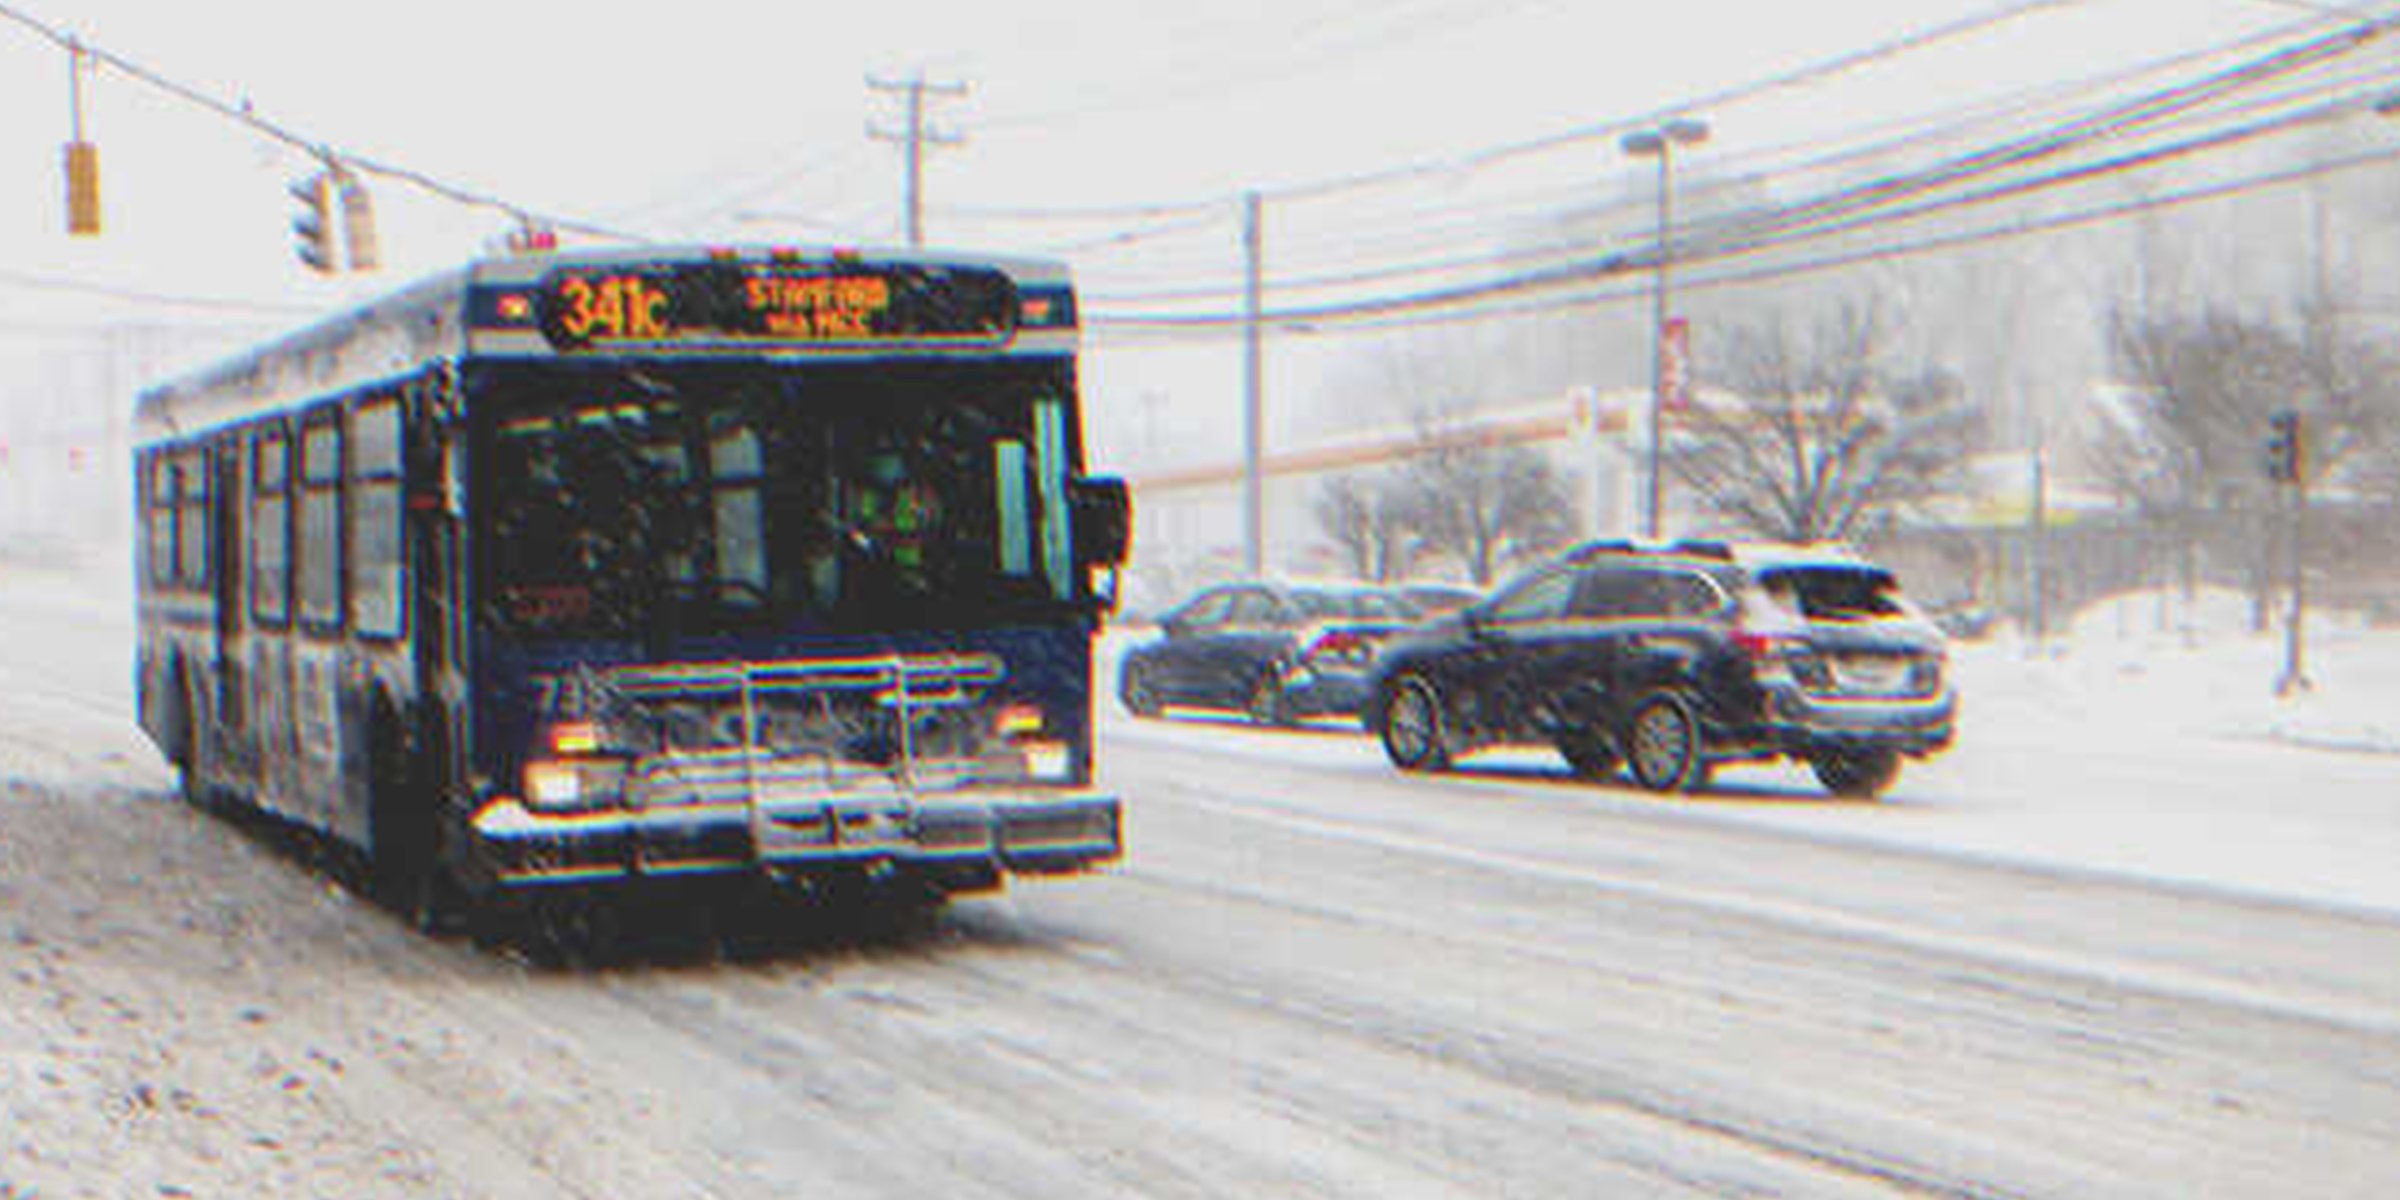 A bus on a snowy road | Shutterstock